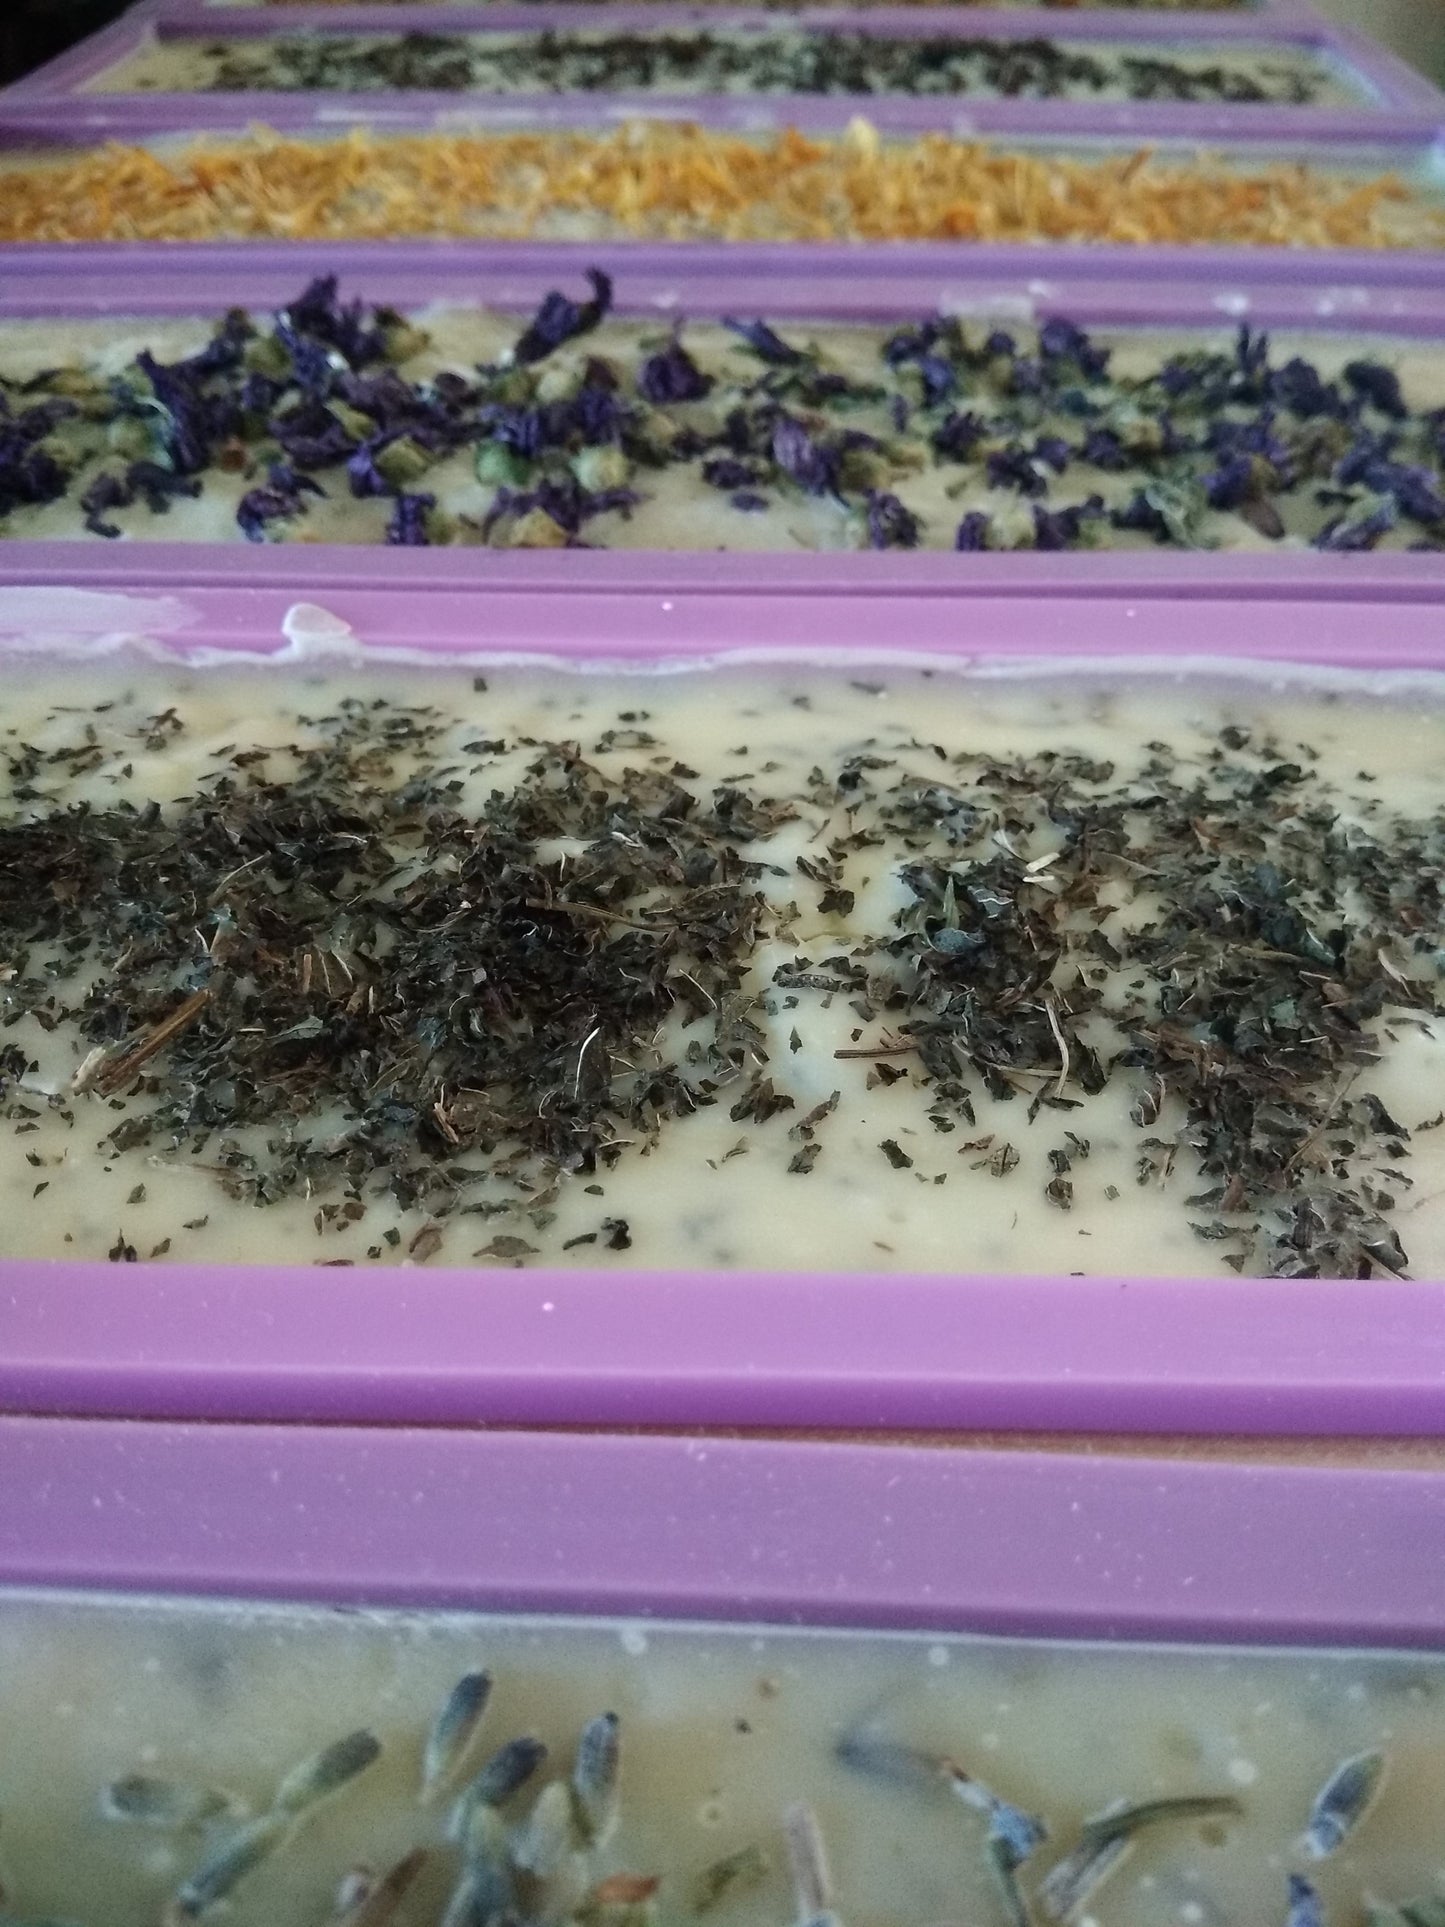 MINI BUNDLE - 4 x 90g Organic Certified Solid Soap - Lavender & Mint with Shredded Mint Leaves - Earthsenseorganics